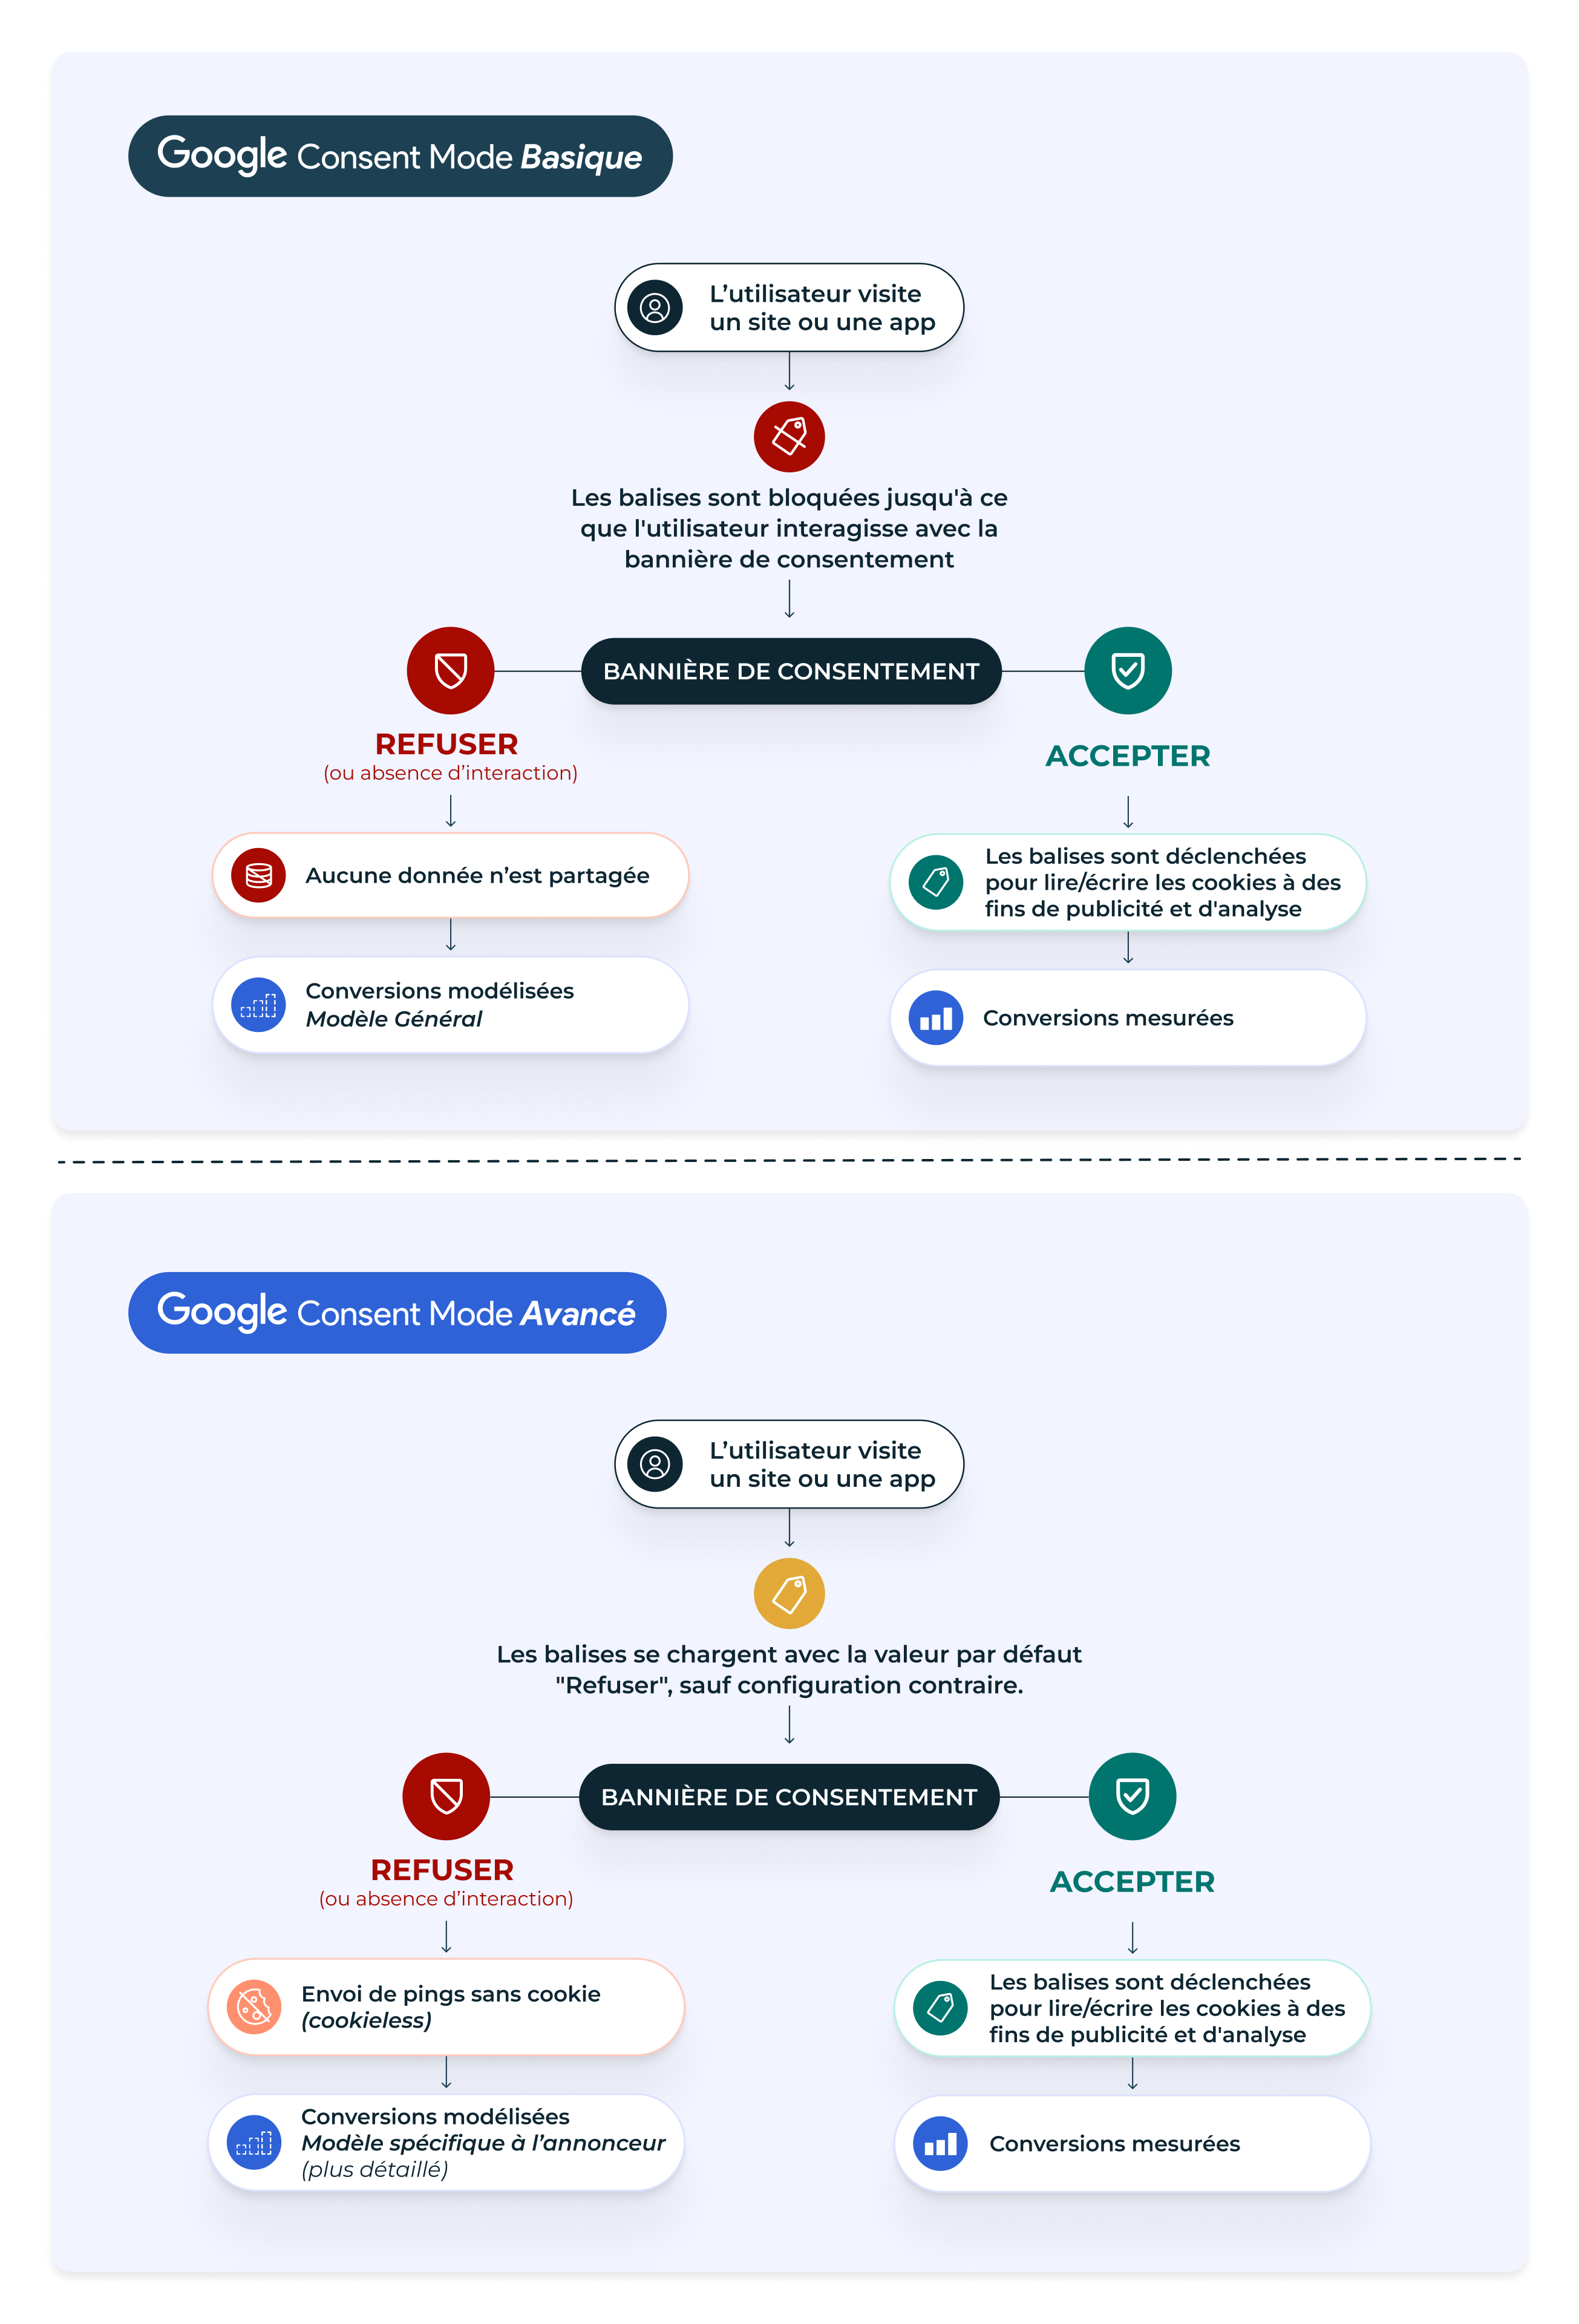 Didomi - Google consent mode v2 mode avancee et basique